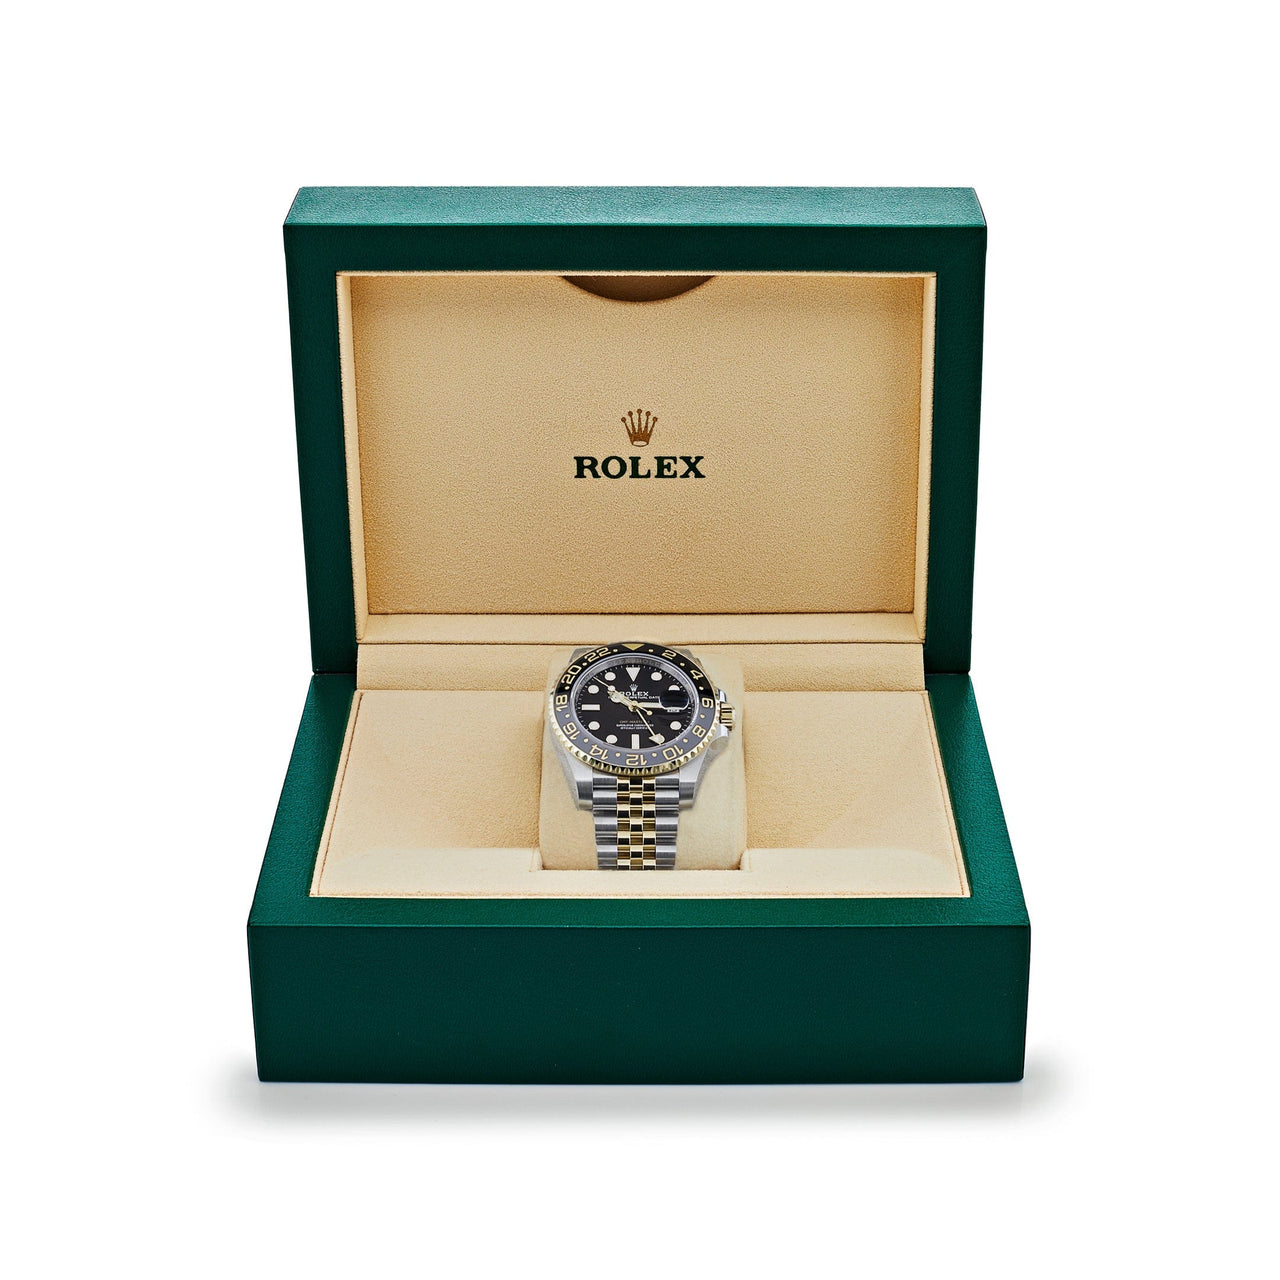 Rolex GMT-Master II Steel and Yellow Gold Black Dial Jubilee 126713GRNR Wrist Aficionado